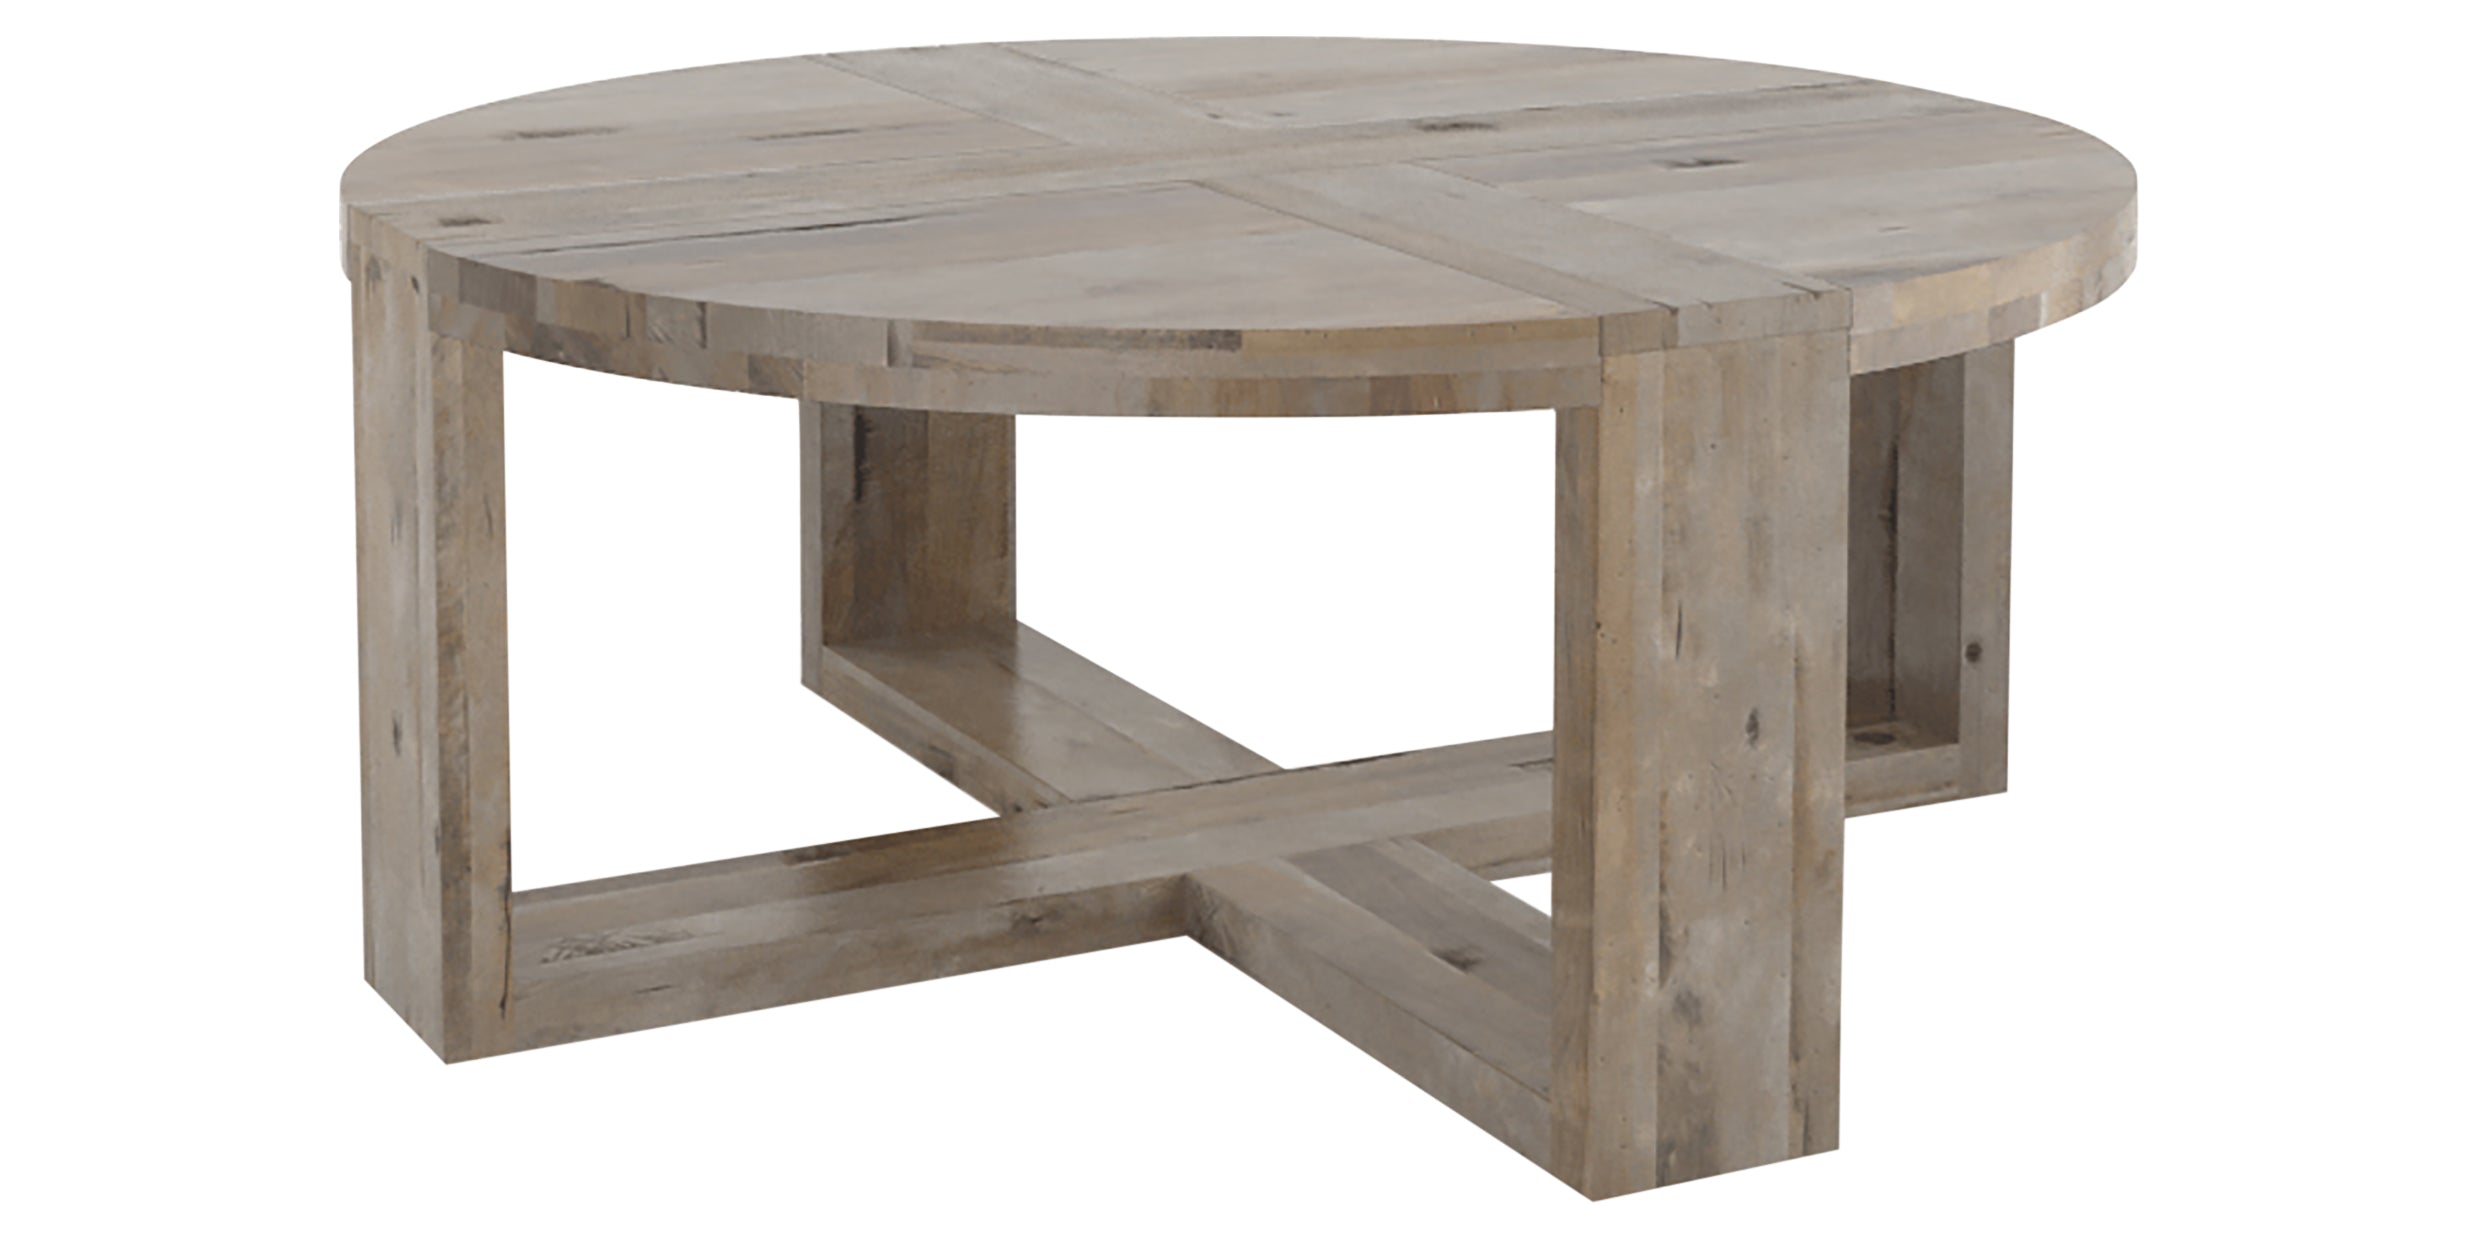 Shadow | Canadel Loft Coffee Table 4242 - Round | Valley Ridge Furniture